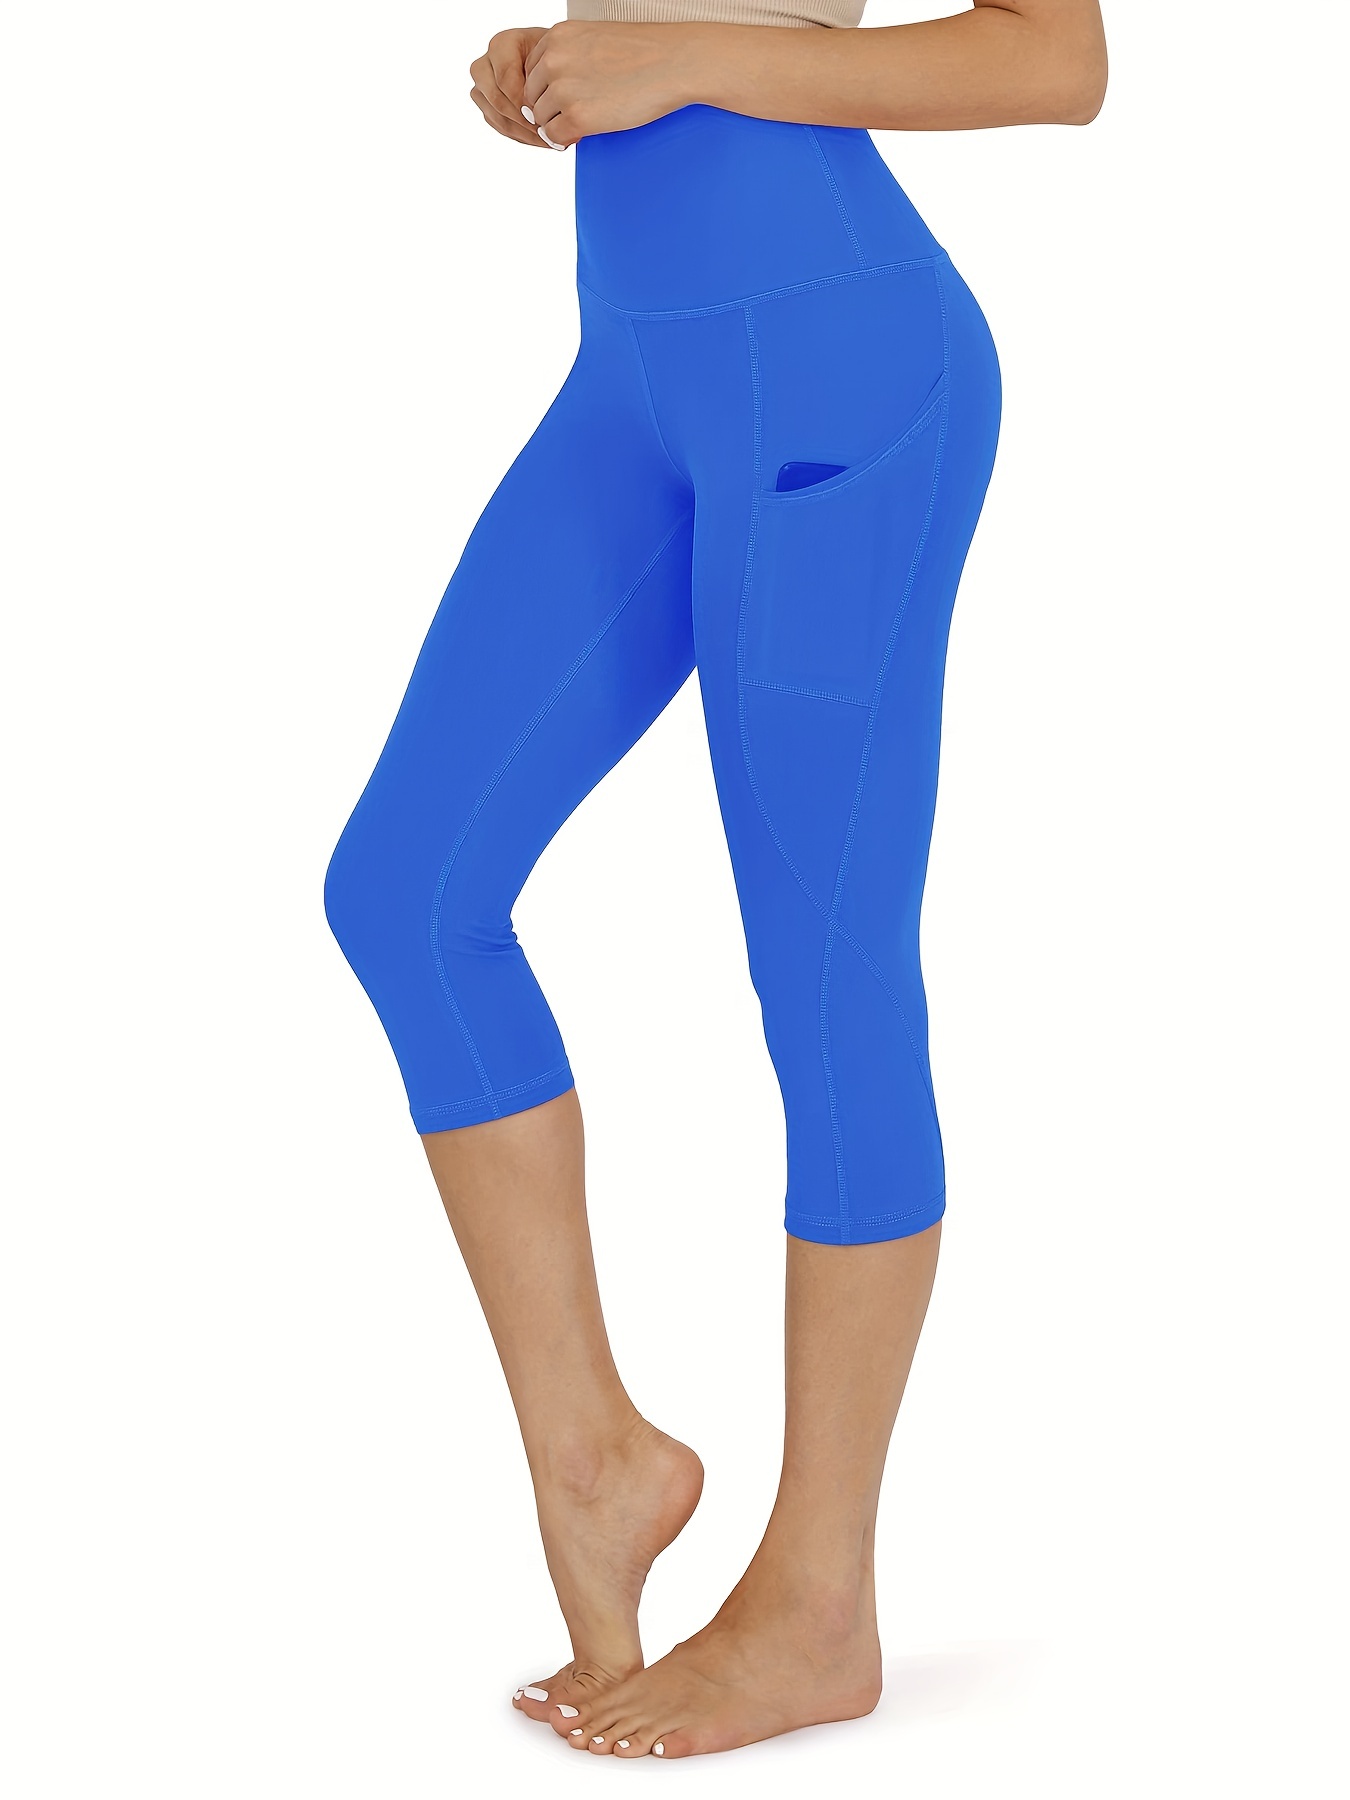 KINPLE Comfy Yoga Pants - Workout Capris - High Waist Workout Leggings for  Women - Lightweight Baseball Printed Yoga Pants 